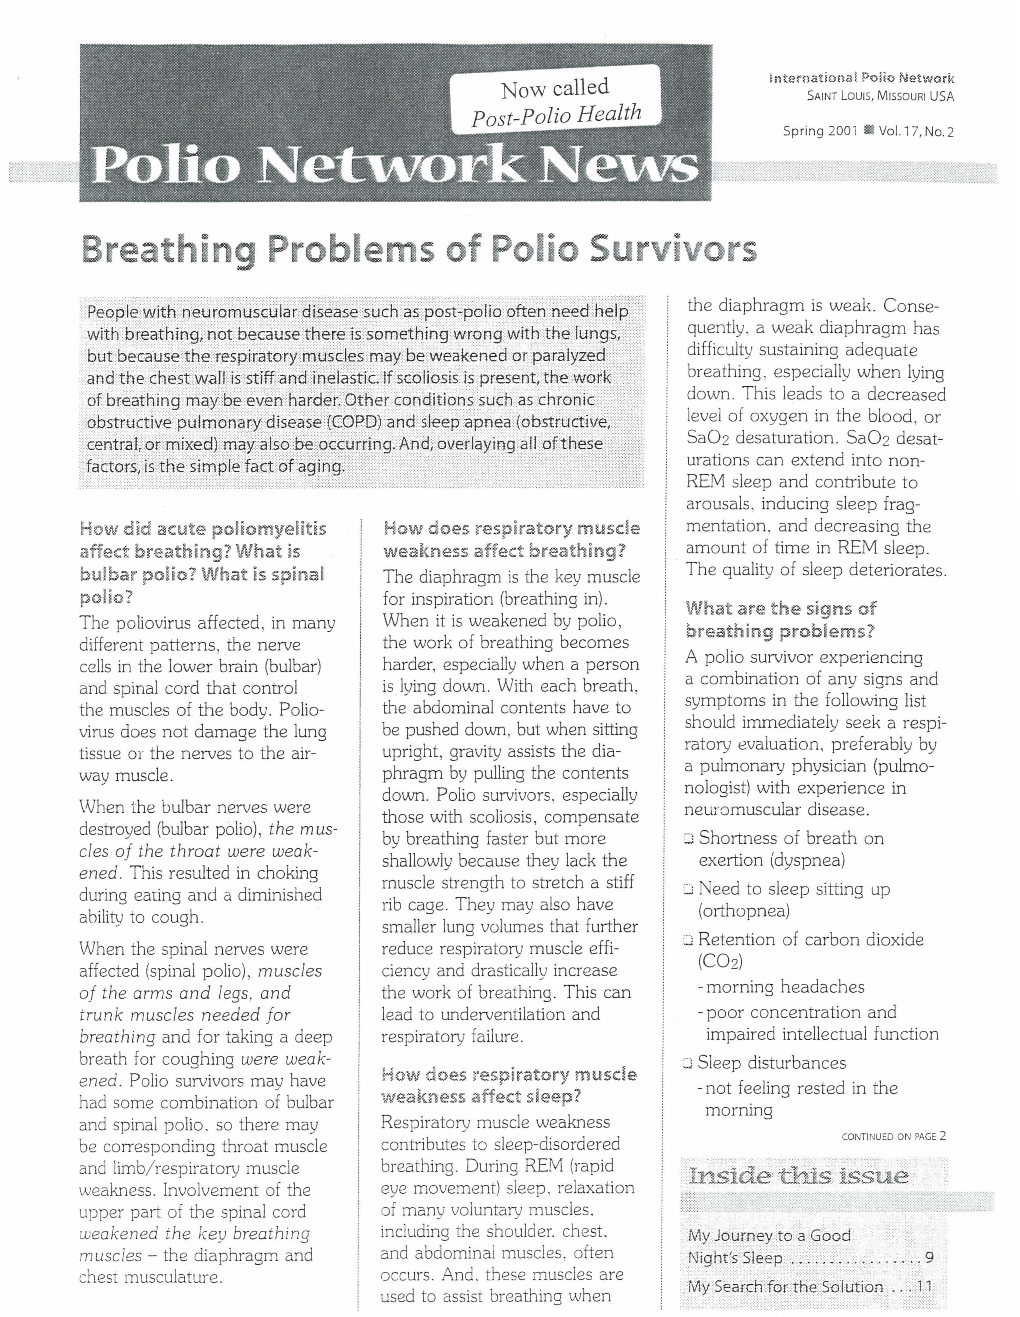 Breathing Problems of Polio Survivors